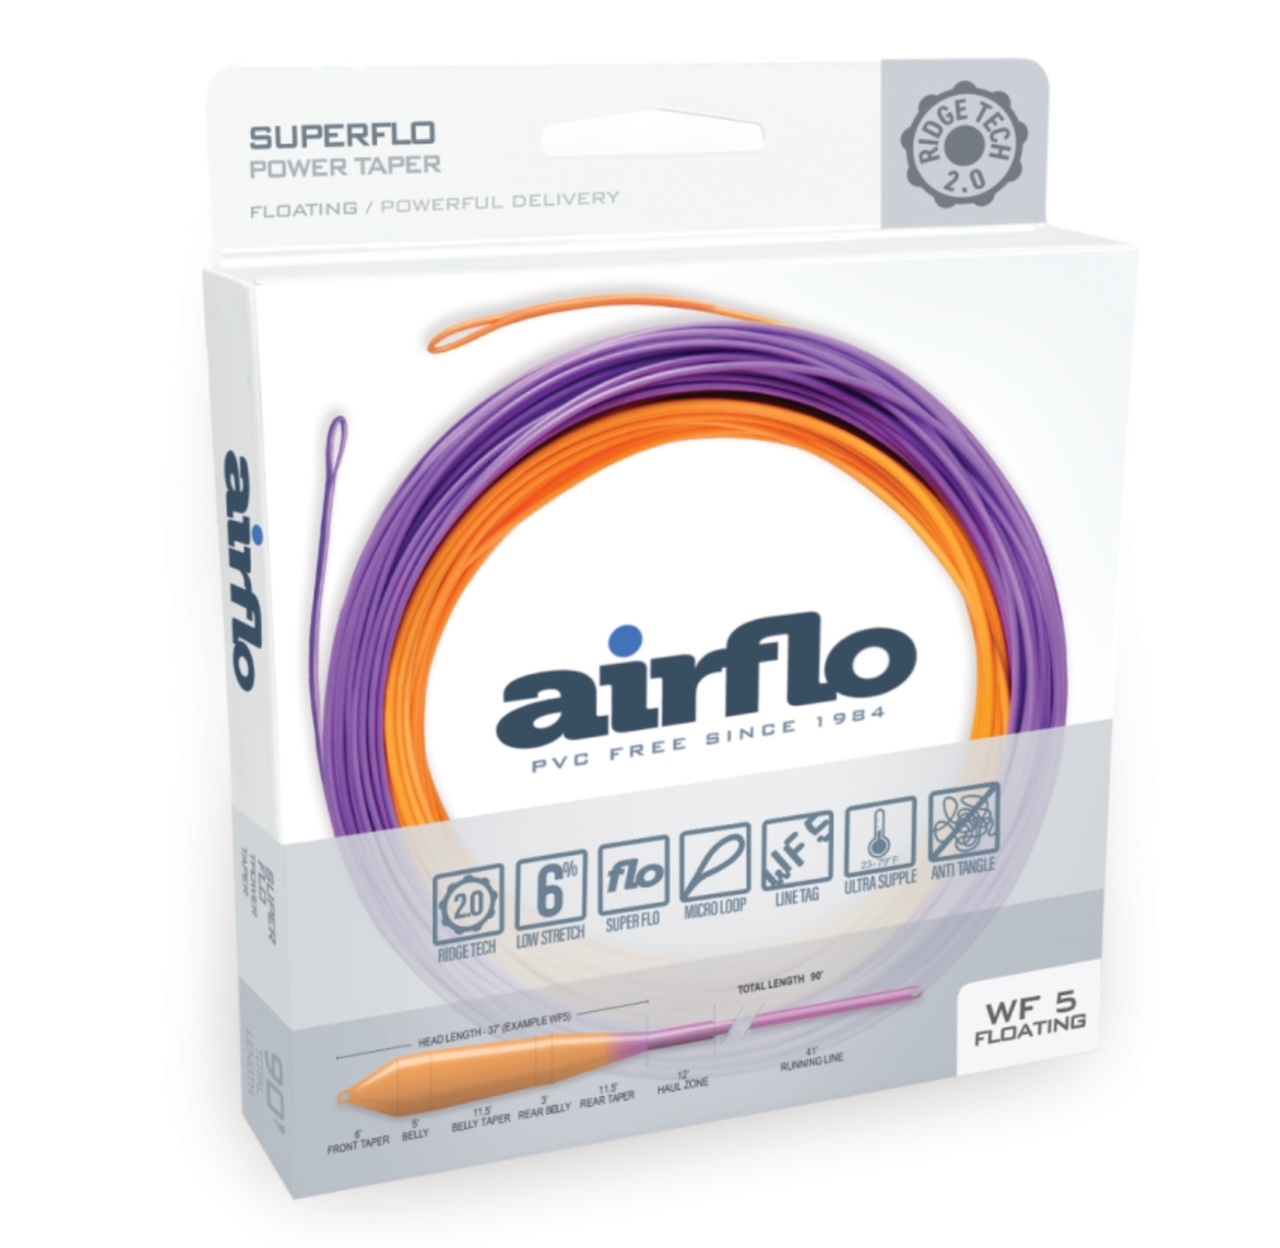 Airflo Superflo Ridge 2.0 Power Taper - WF7F - Sunburst/Purple